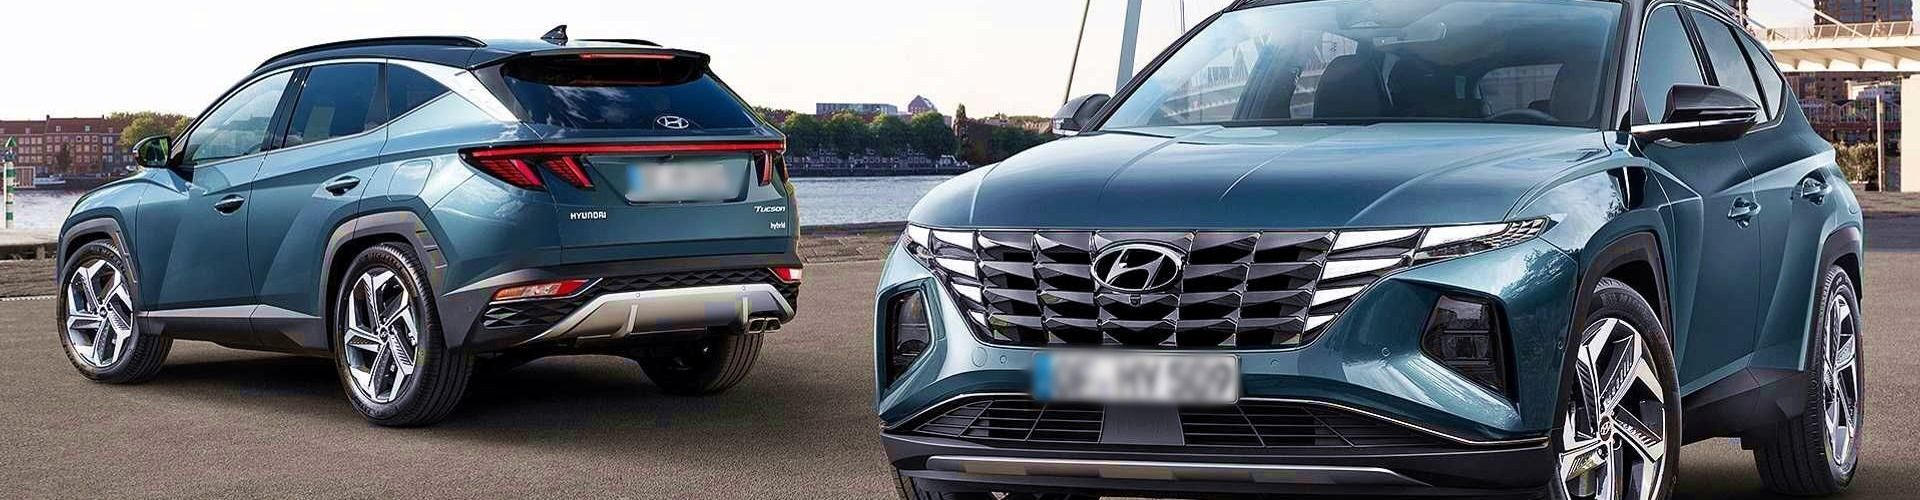 ¿Cuál es mejor Nissan Qashqai o Hyundai Tucson?